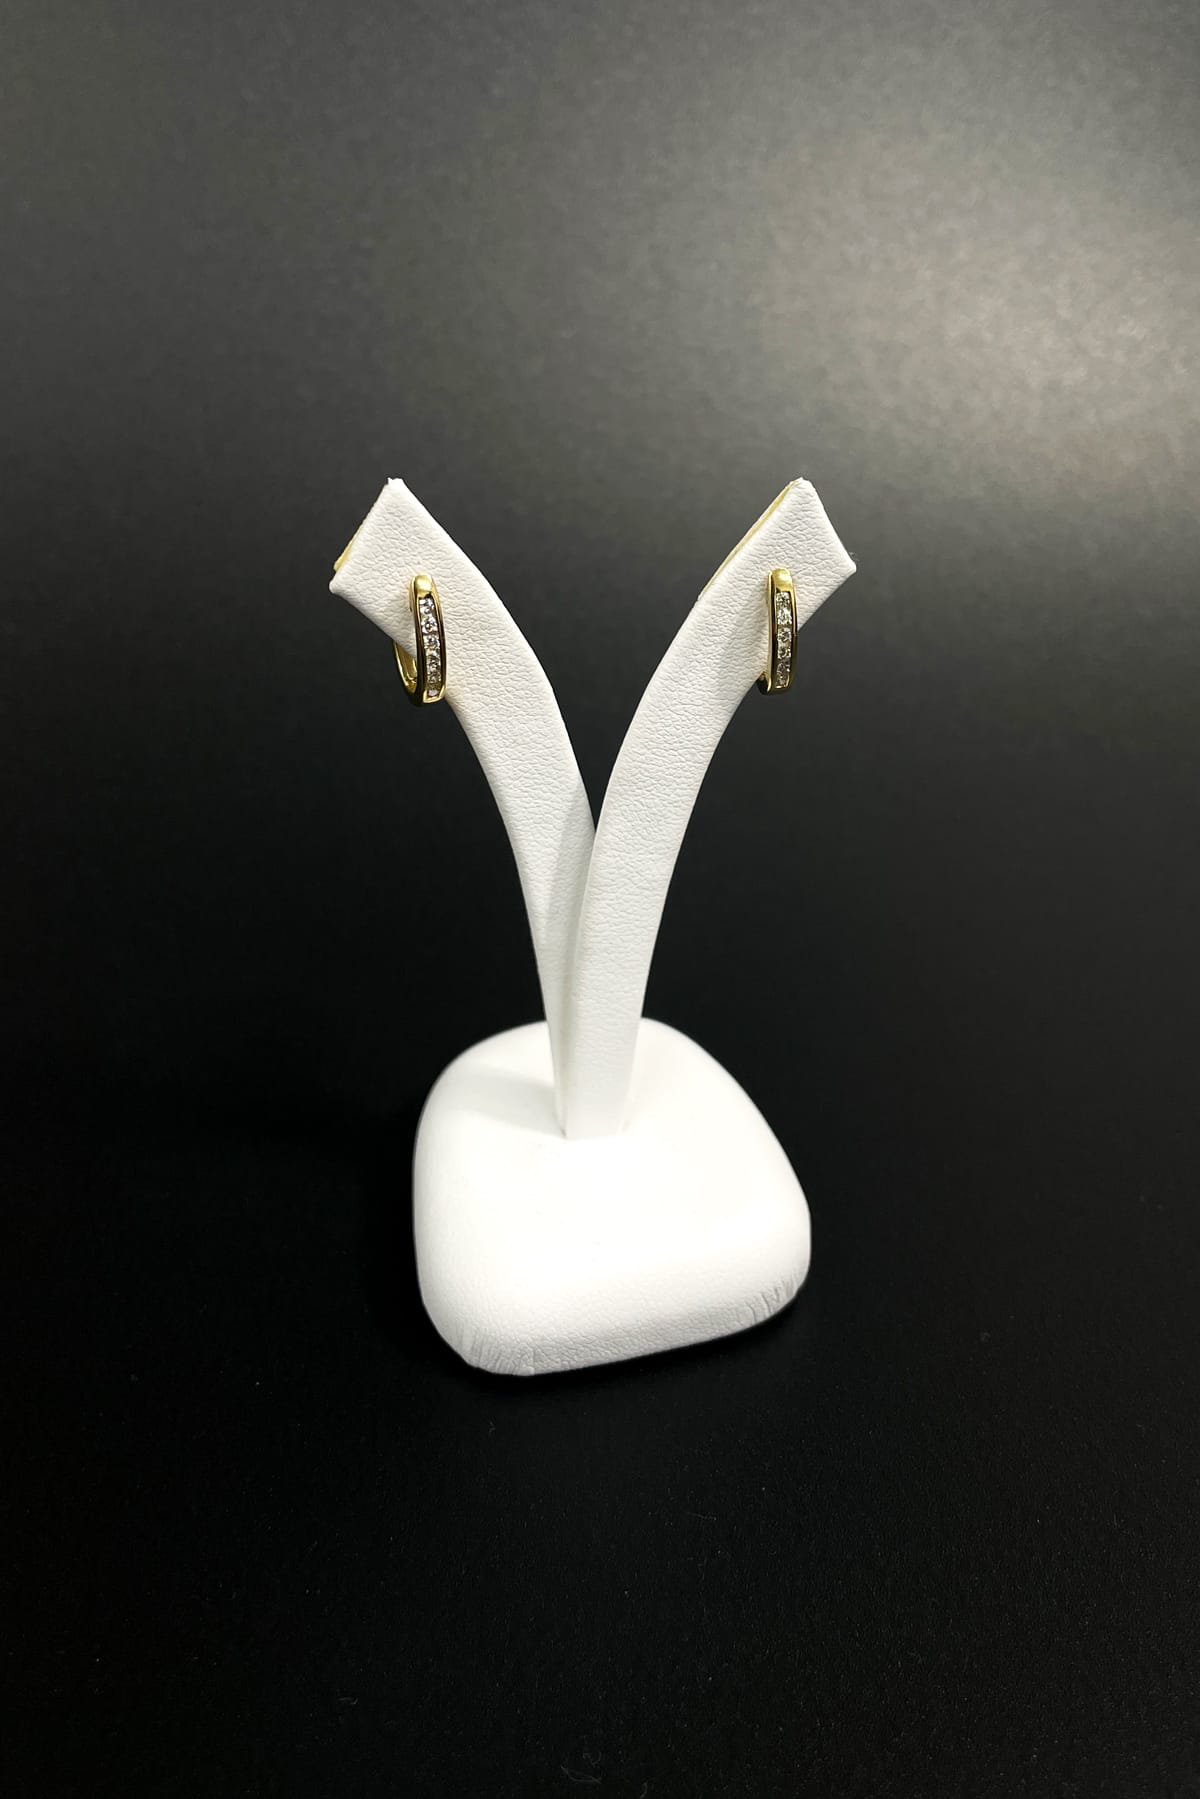 9ct Yellow Gold Diamond Set Oval Hoop Earrings at LeGassick Diamonds & Jewellery.